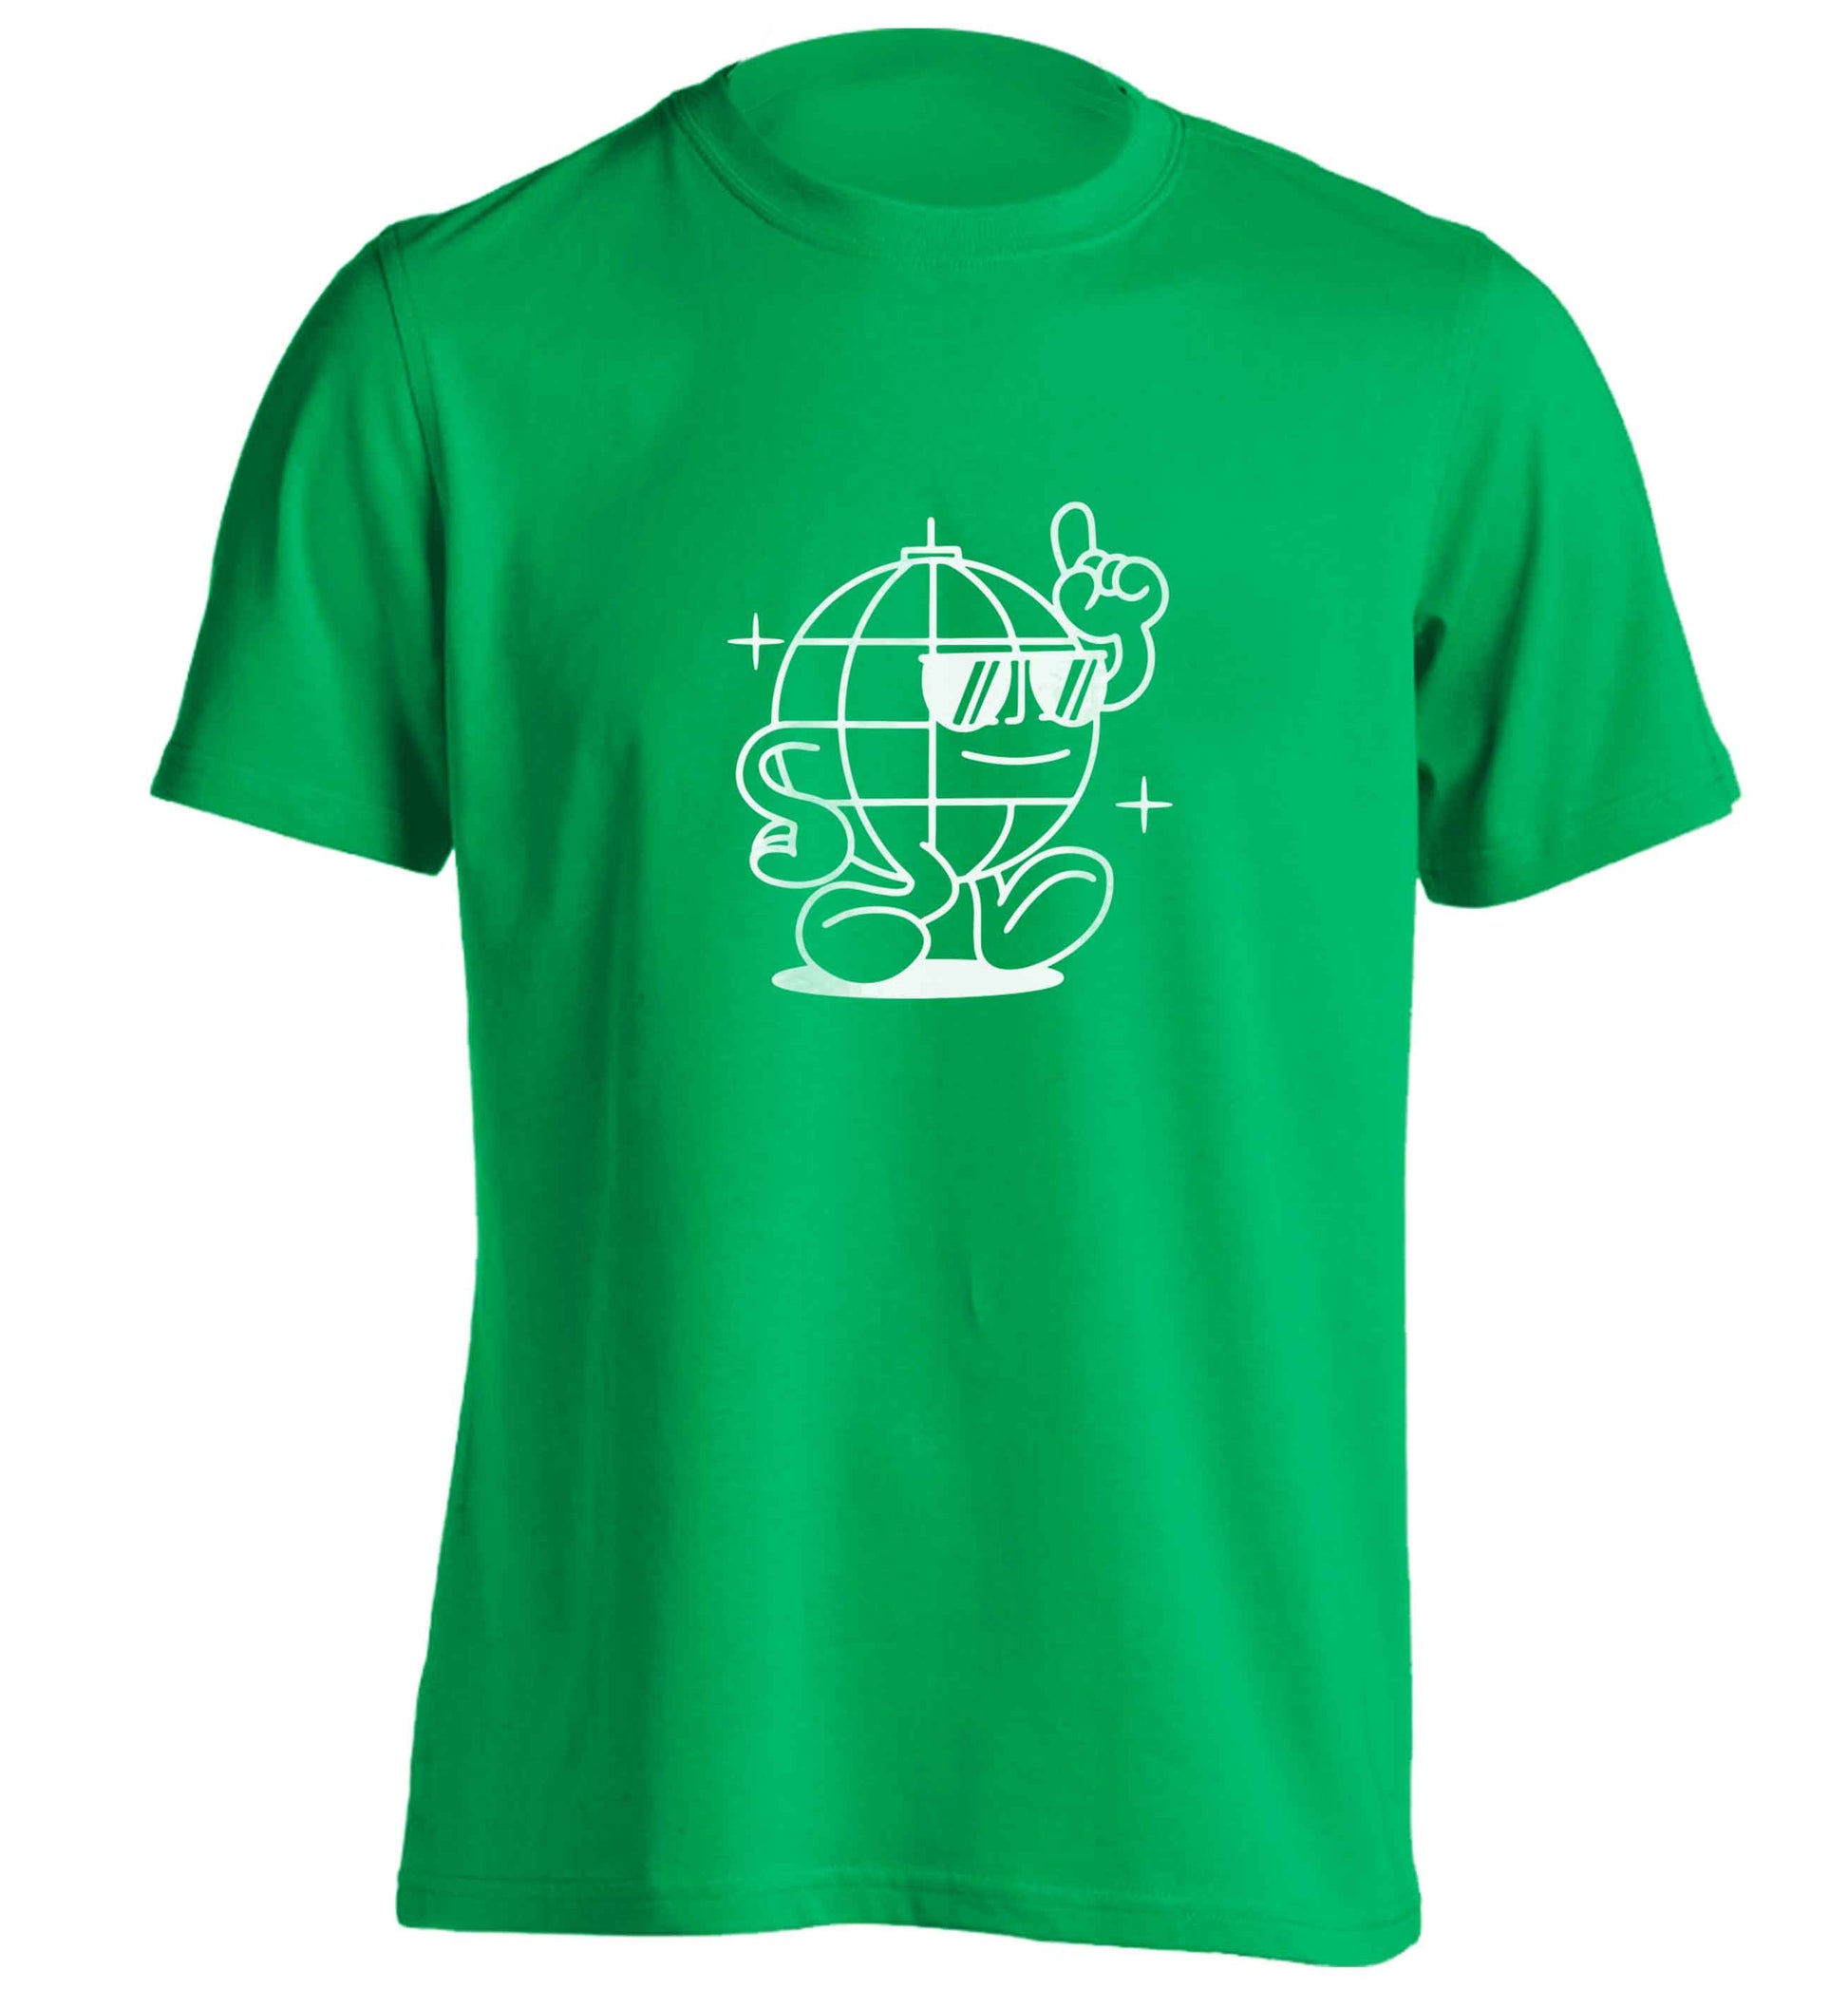 Disco ball adults unisex green Tshirt 2XL